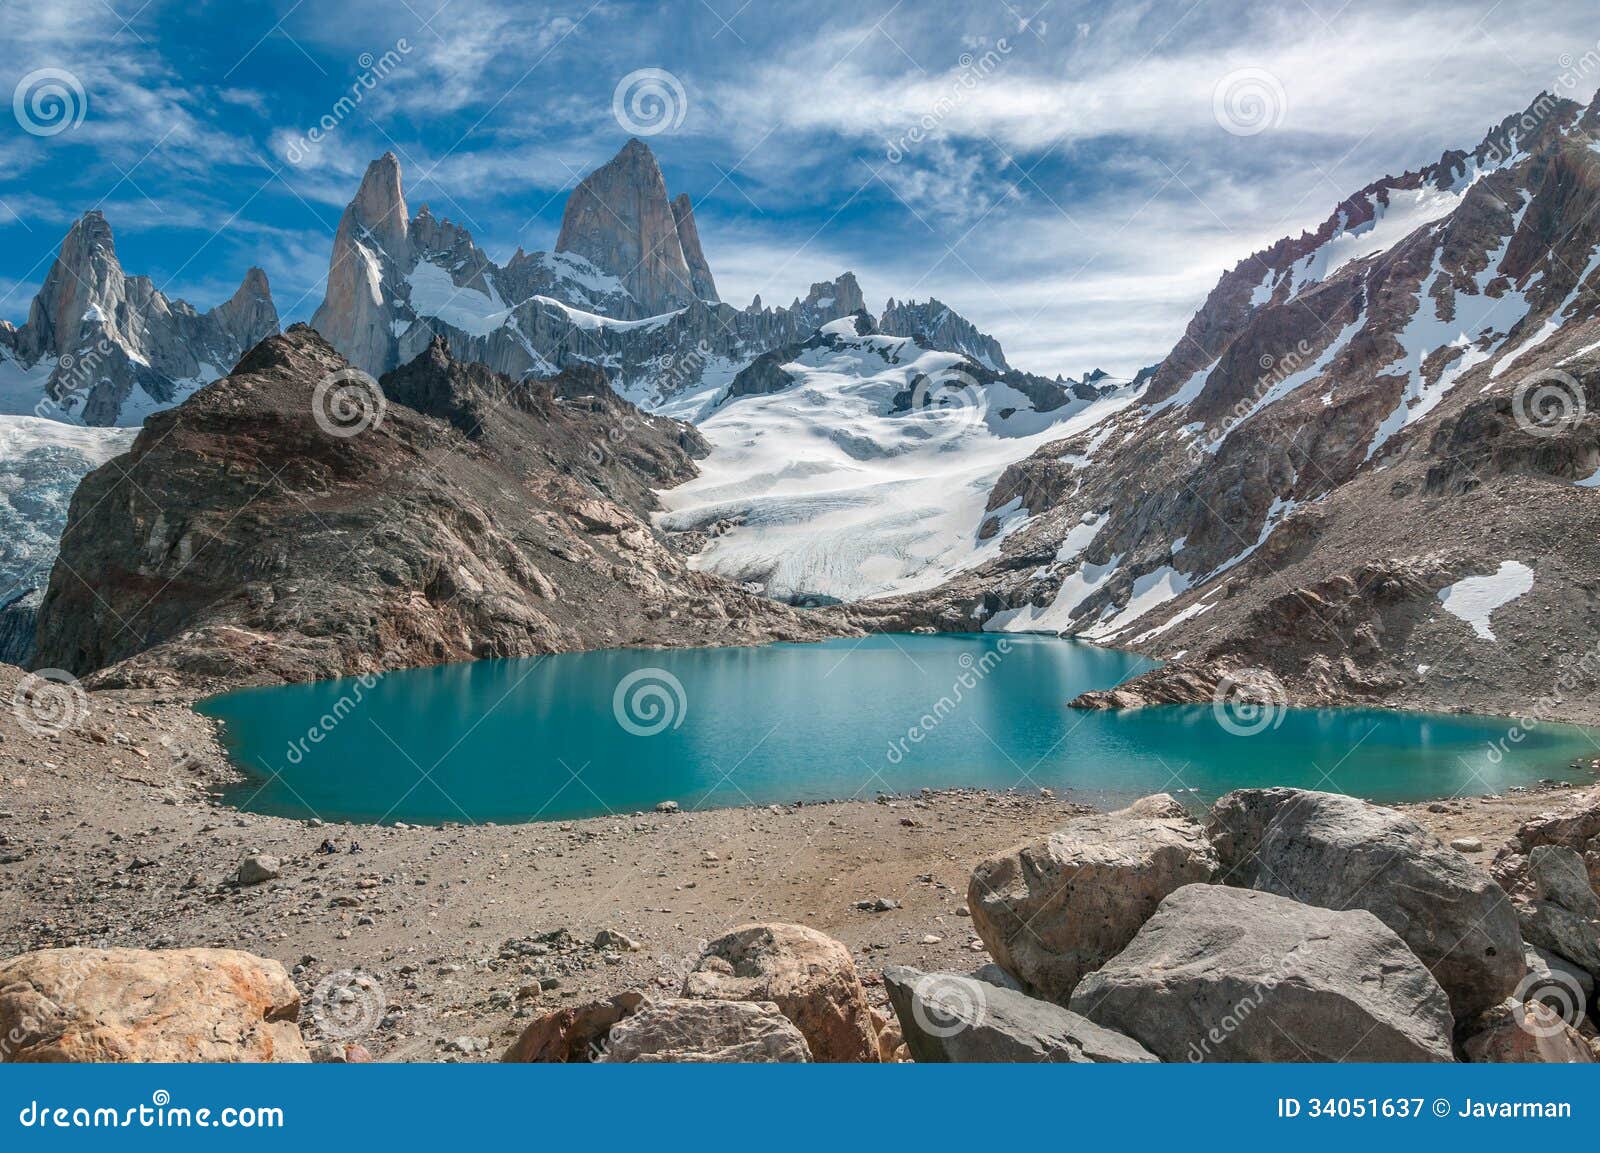 fitz roy mountain and laguna de los tres, patagonia, argentina